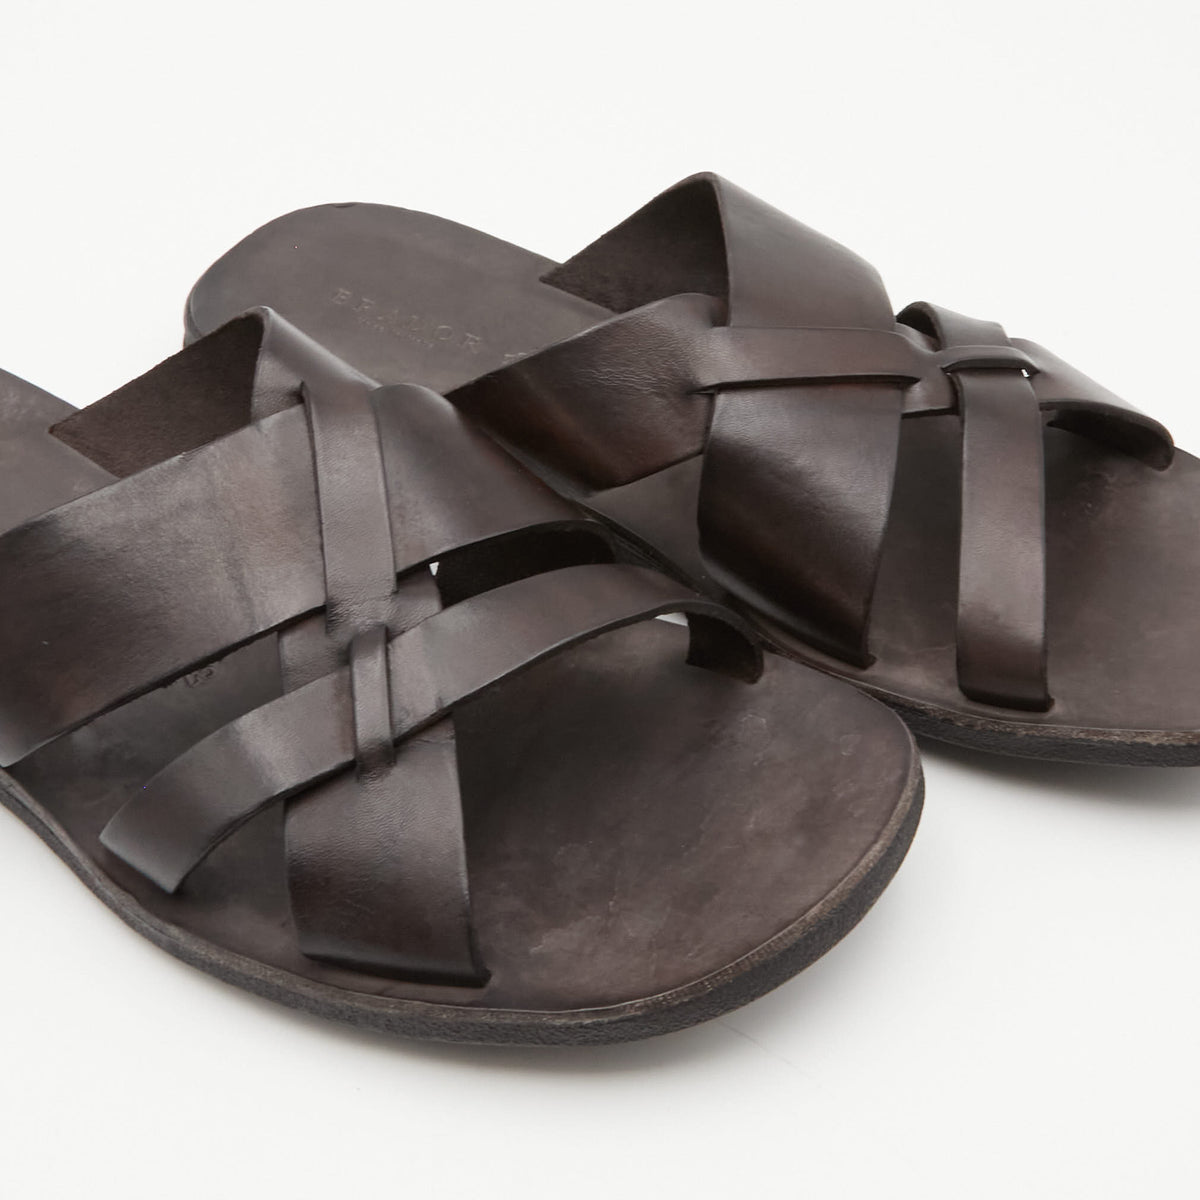 Brador Mens Leather Crossed Sandals